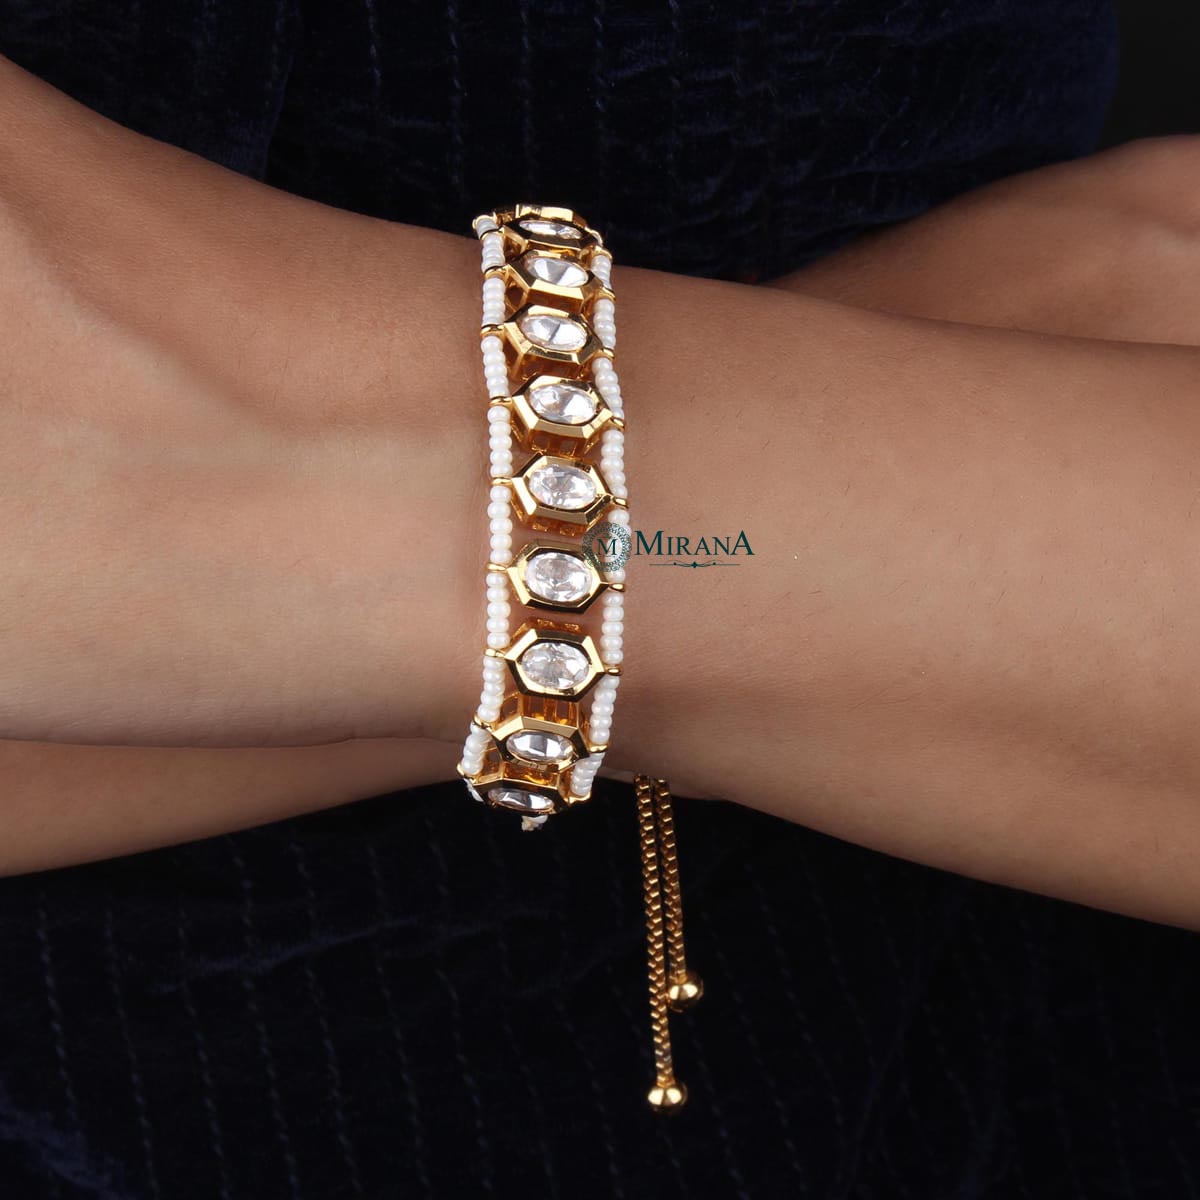 Buy LA BELLEZA Bracelet for Women and Girls  Golden Hanging Heart Shape  Charm Bracelets  Accessories Jewellery  Birthday Anniversary Gift Yellow  Charm Bracelet  Lowest price in India GlowRoad